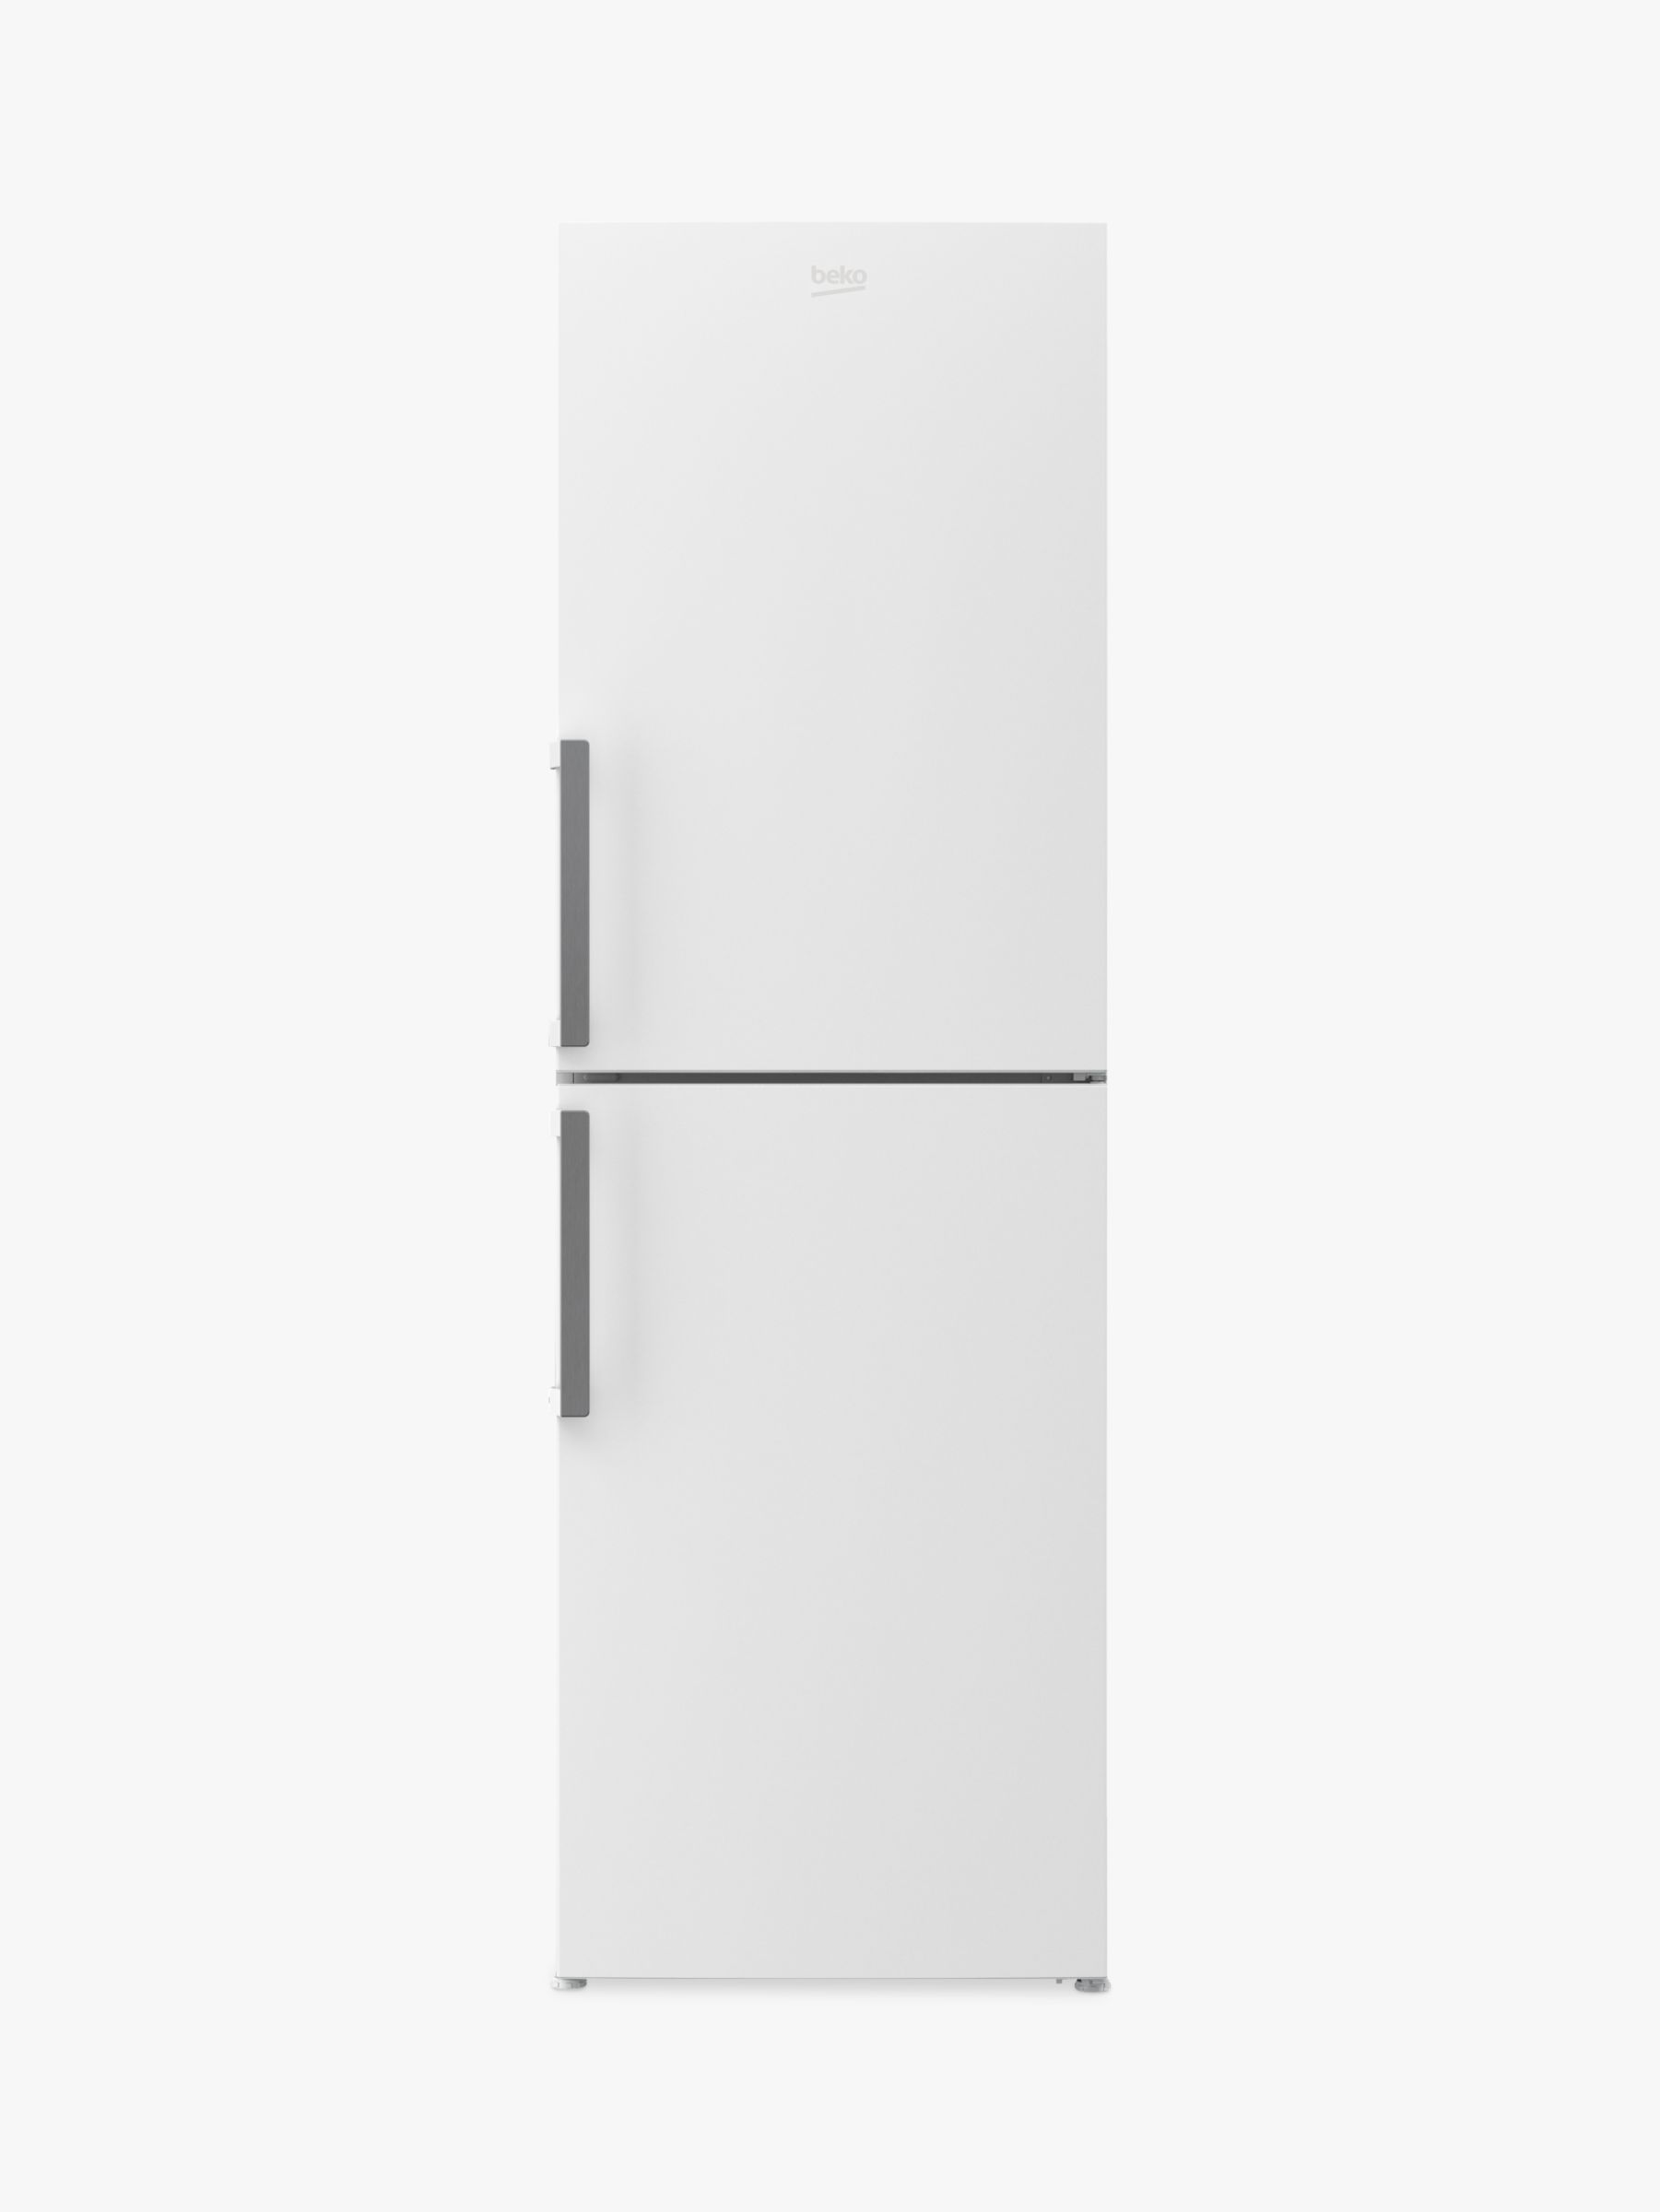 Beko CFP1691W Fridge Freezer, A+ Energy Rating, 60cm Wide, White